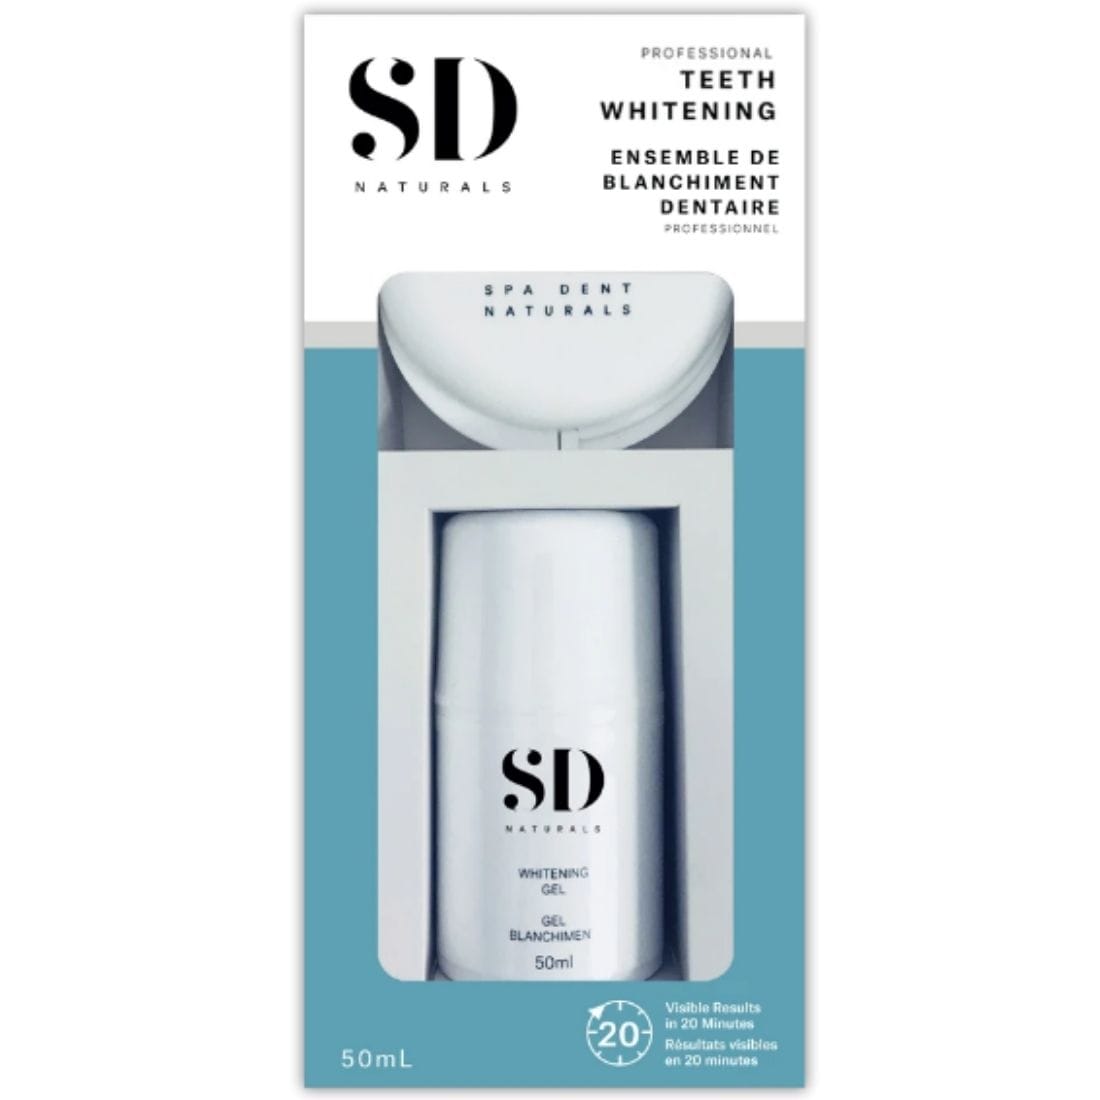 SD Naturals Professional Teeth Whitening Kit